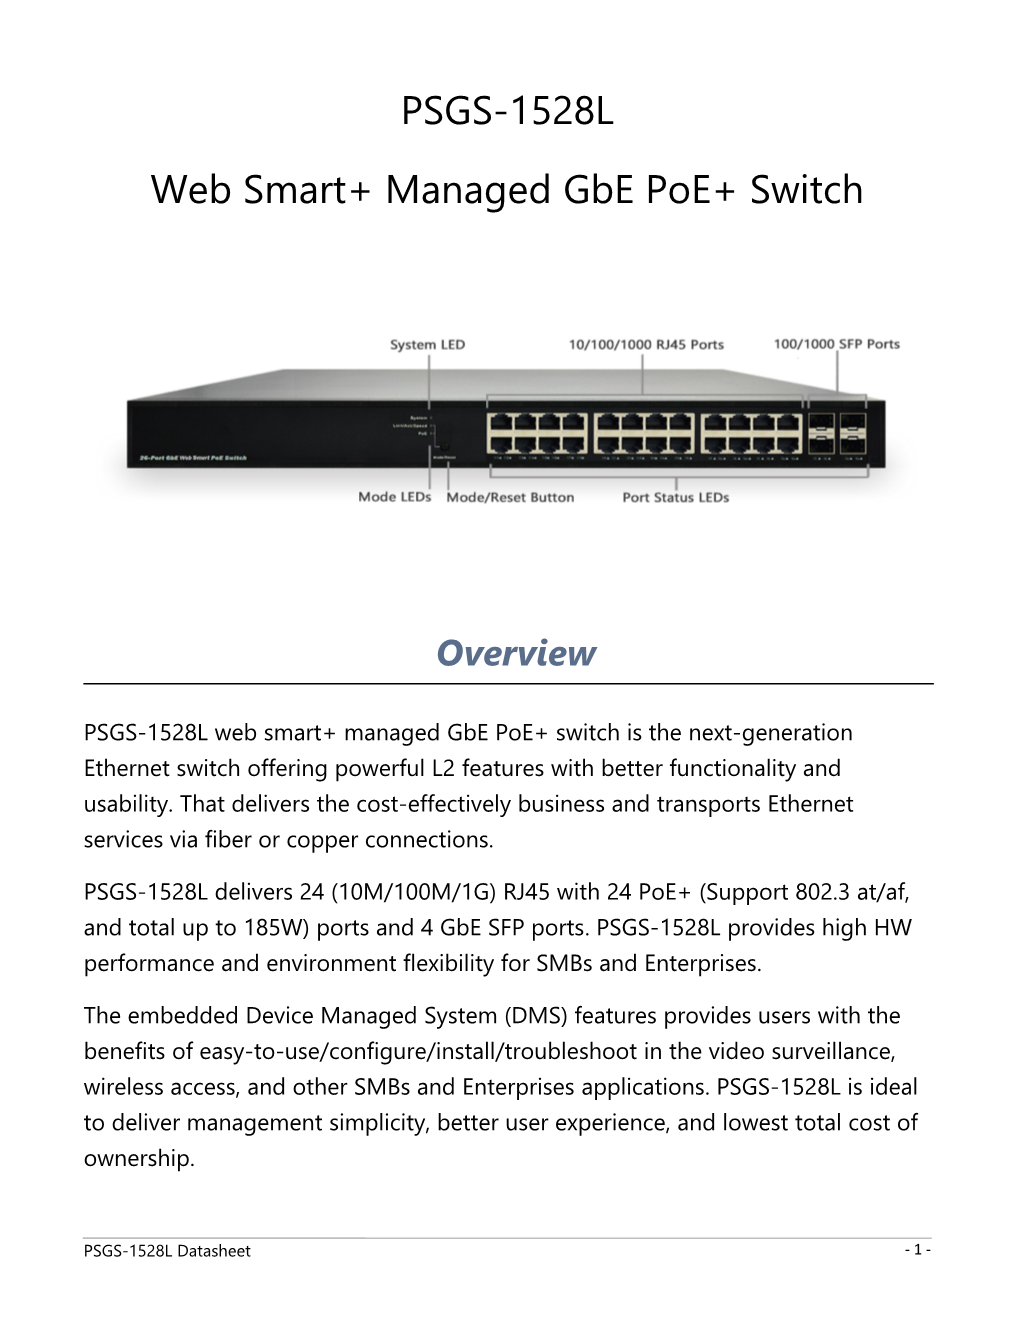 Web Smart+Managed Gbe Poe+ Switch